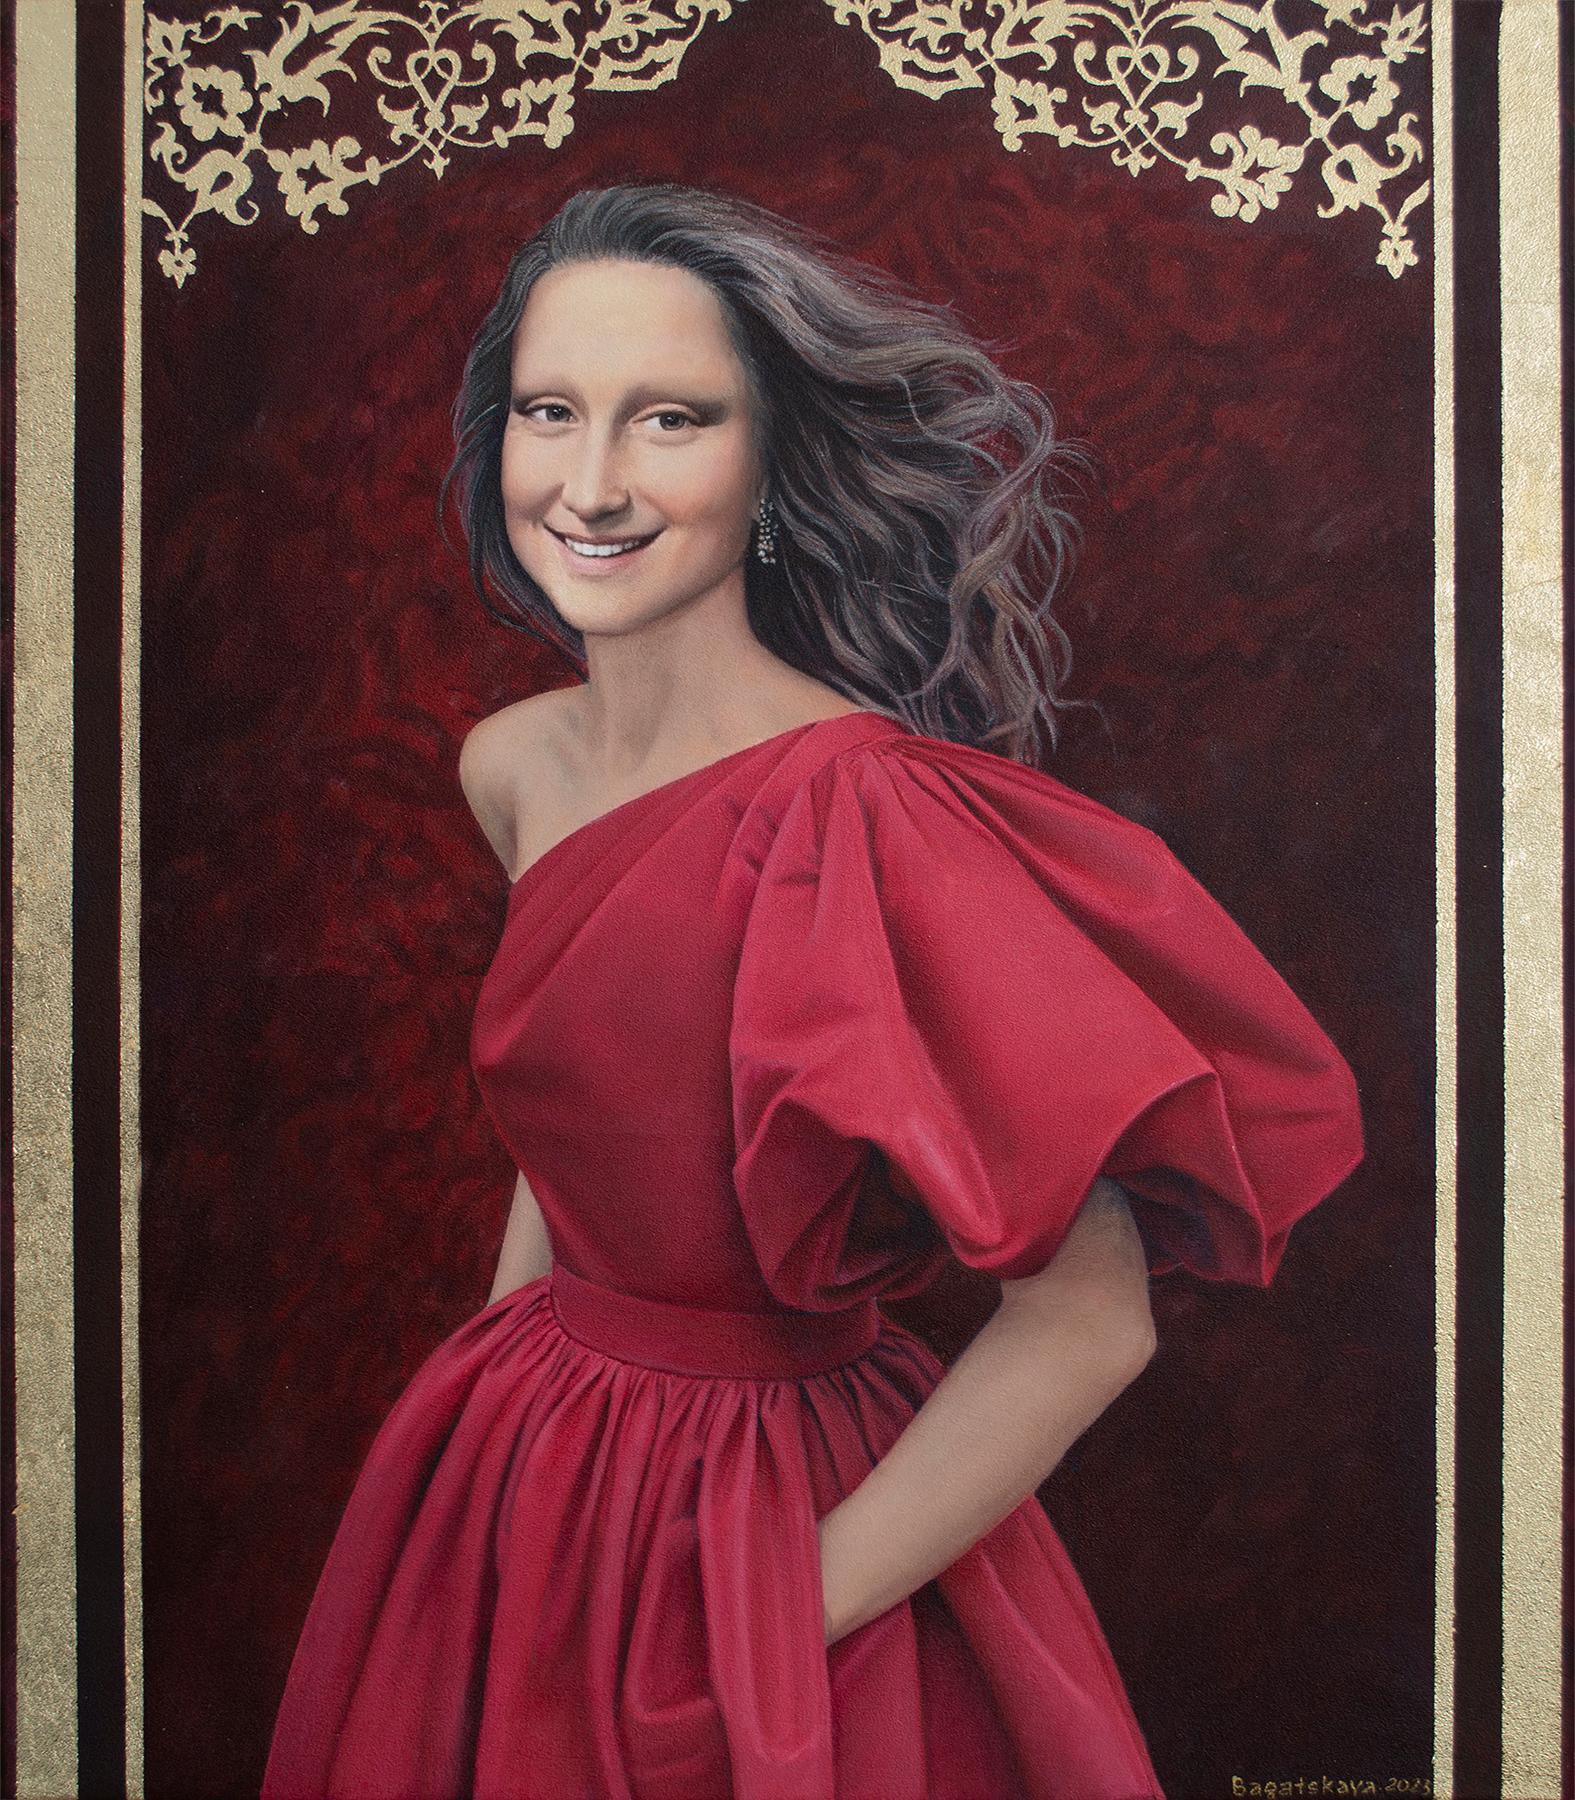 Nataliya Bagatskaya Figurative Painting - Contemporary portrait "Holiday dress"